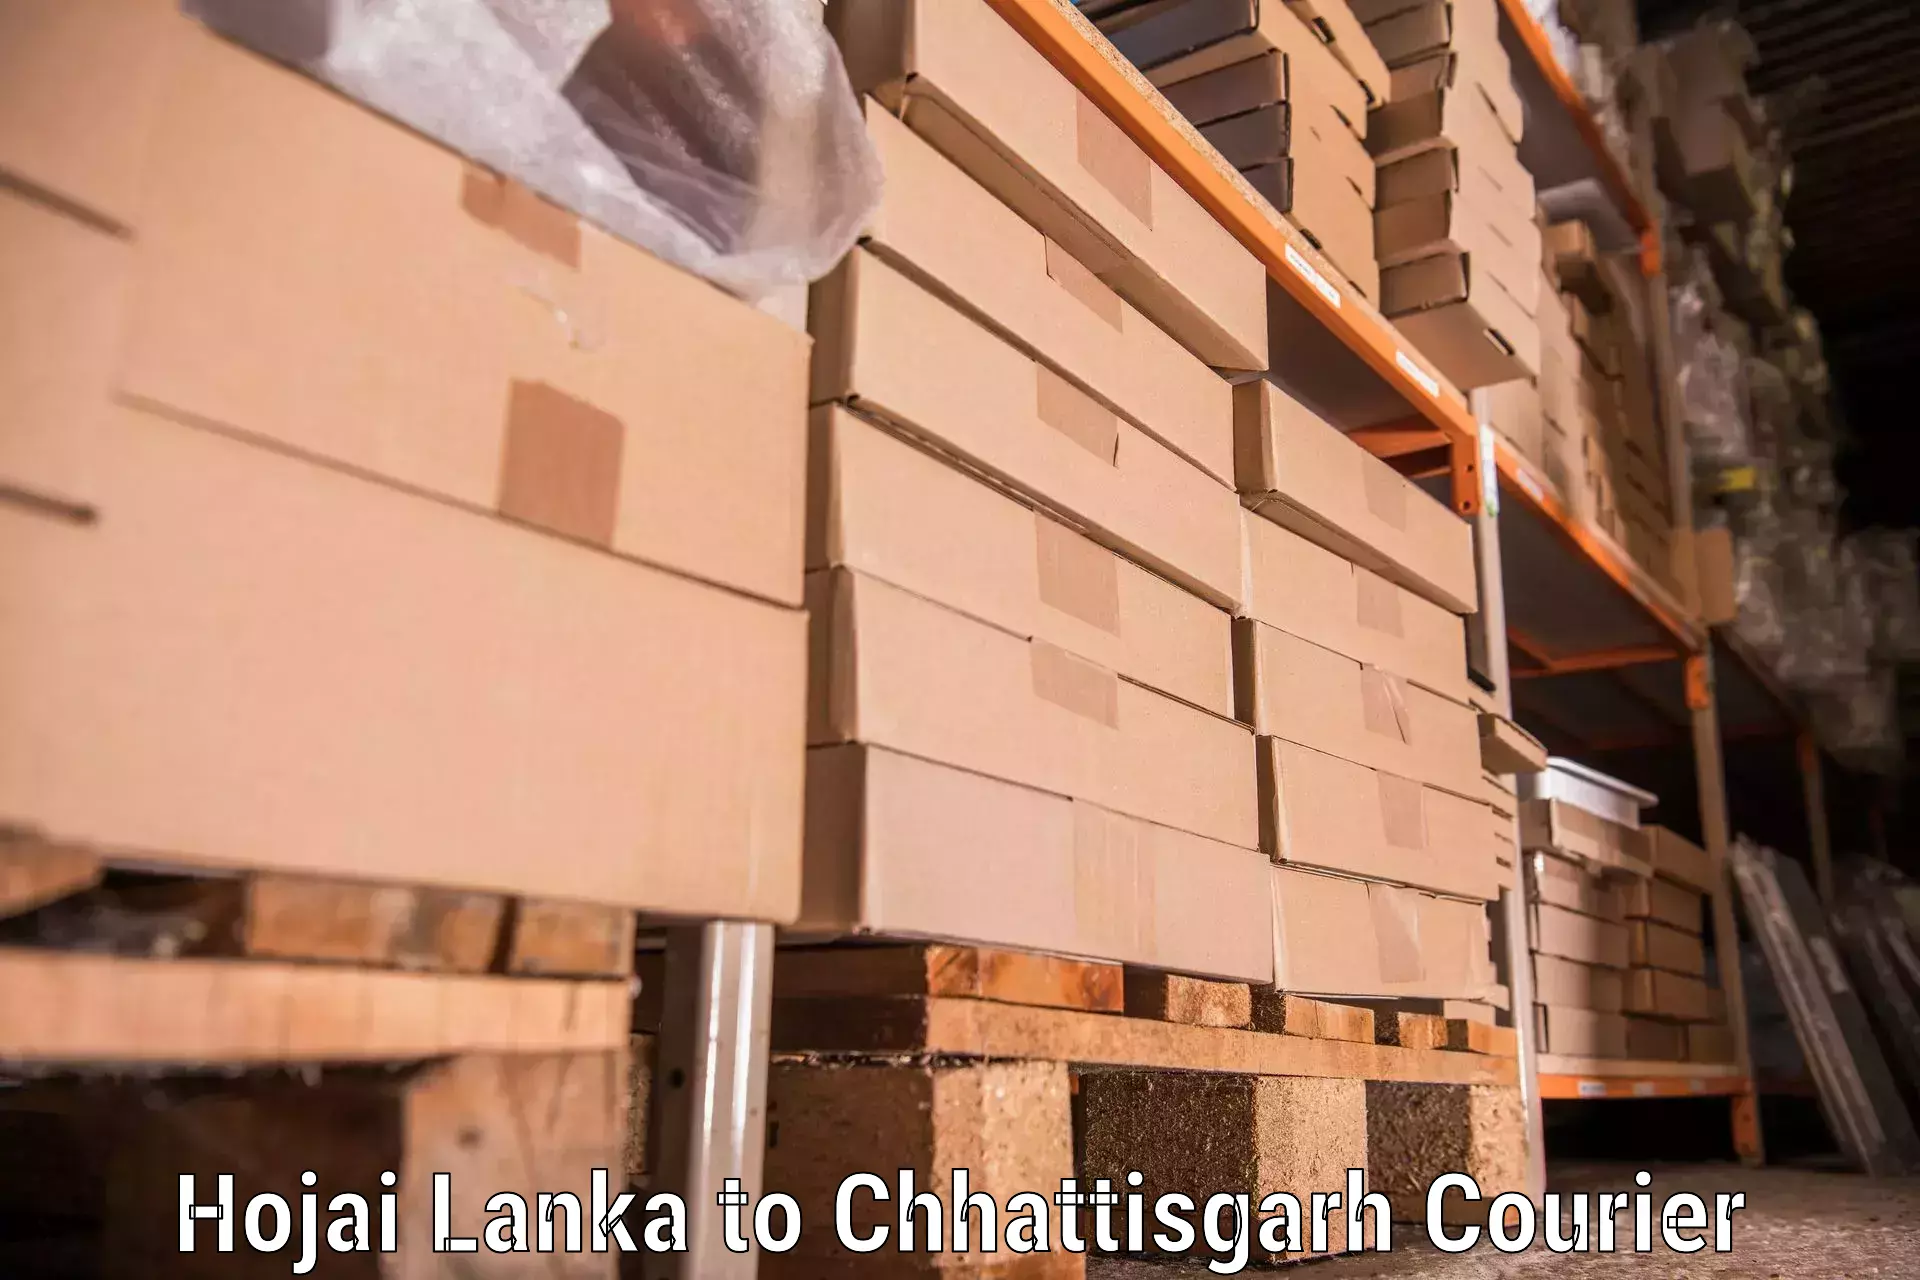 Professional moving company Hojai Lanka to Sakti